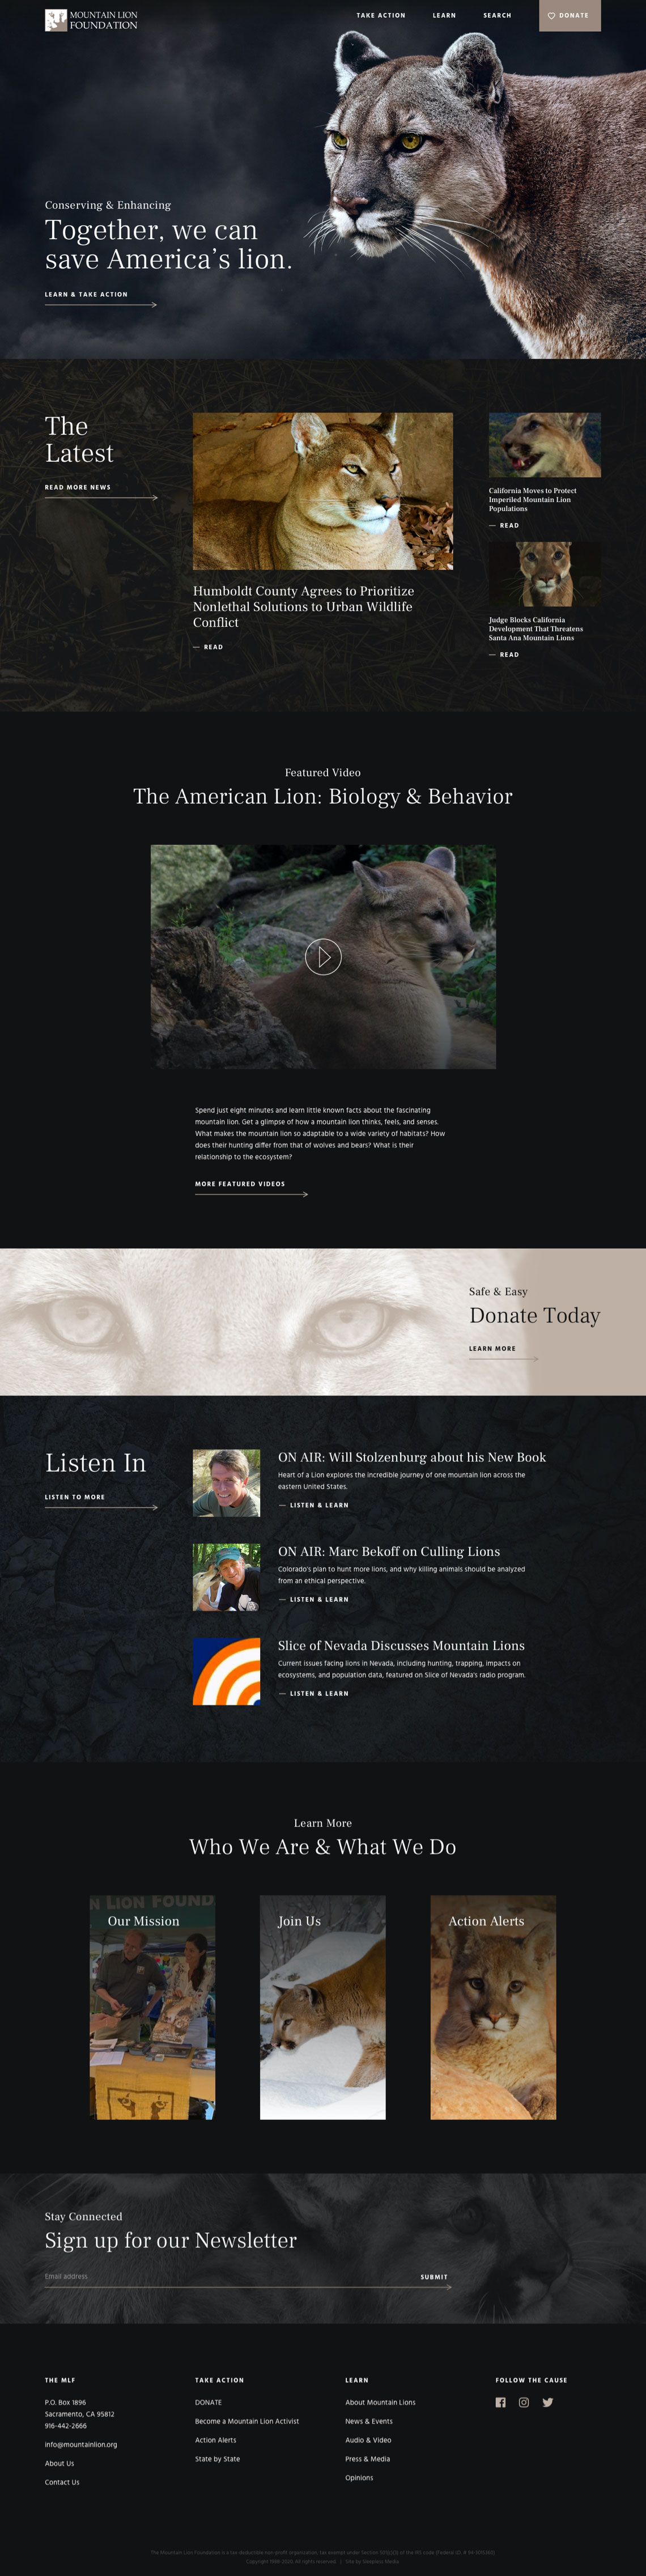 Mountain Lion Foundation - Homepage